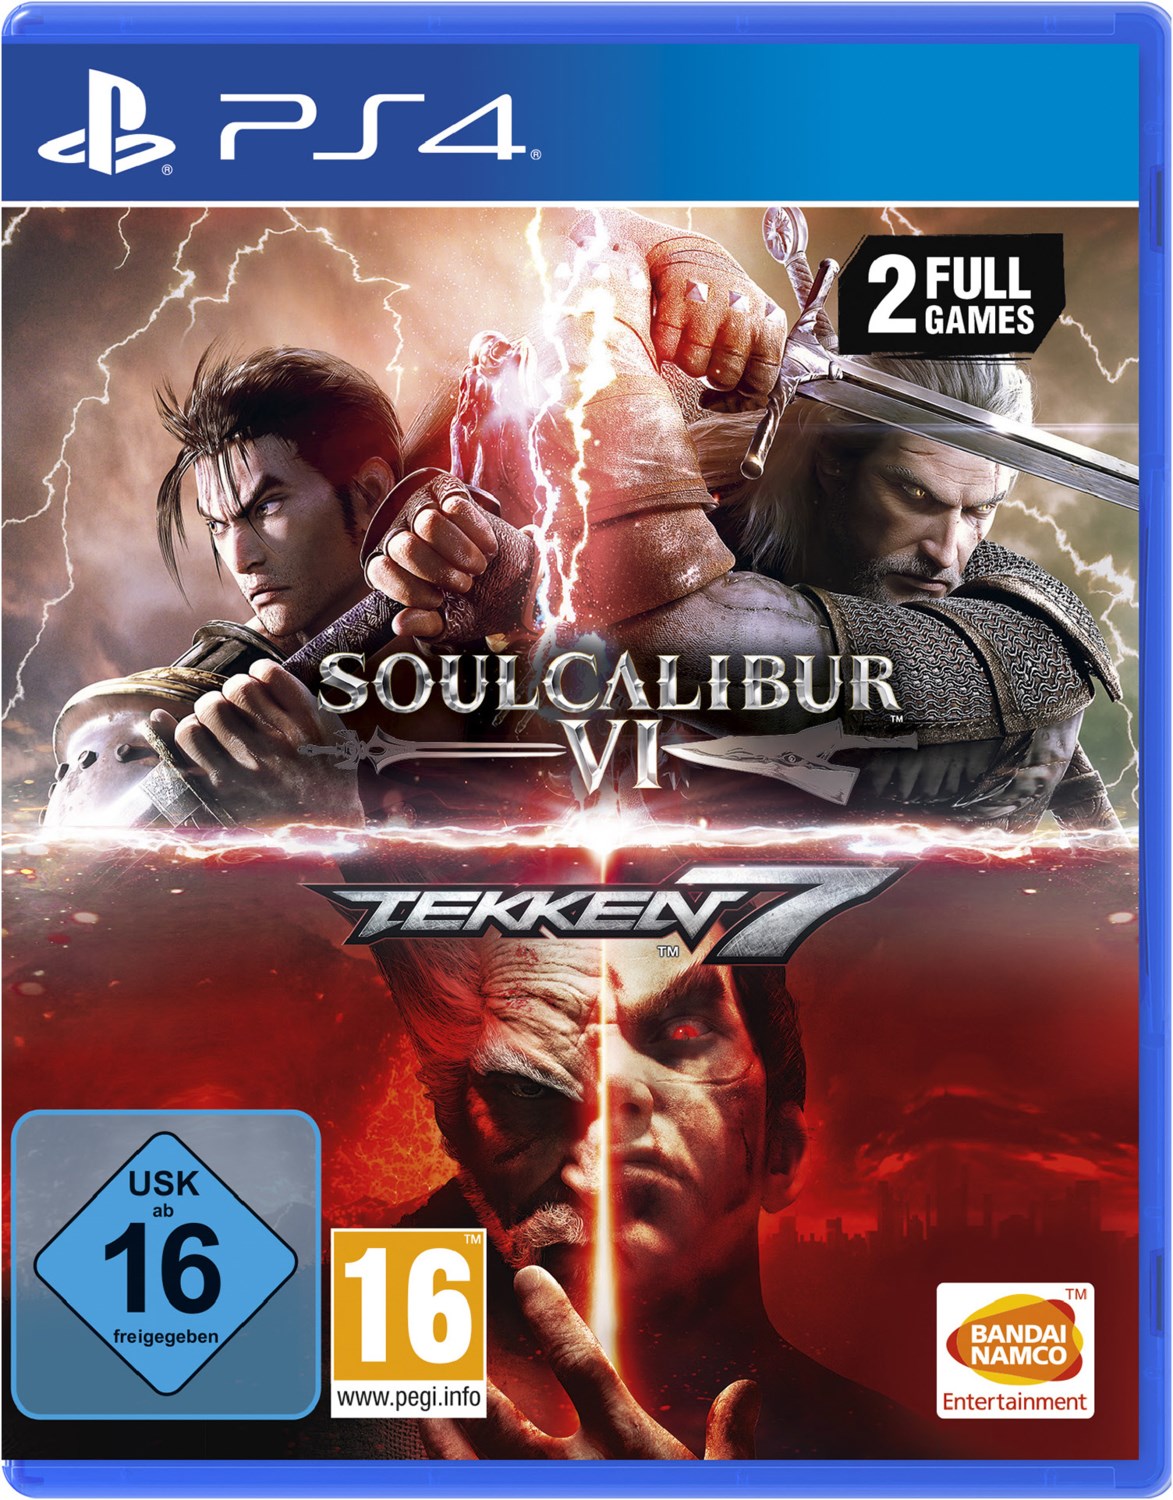 PS4 Tekken 7 + SoulCalibur VI